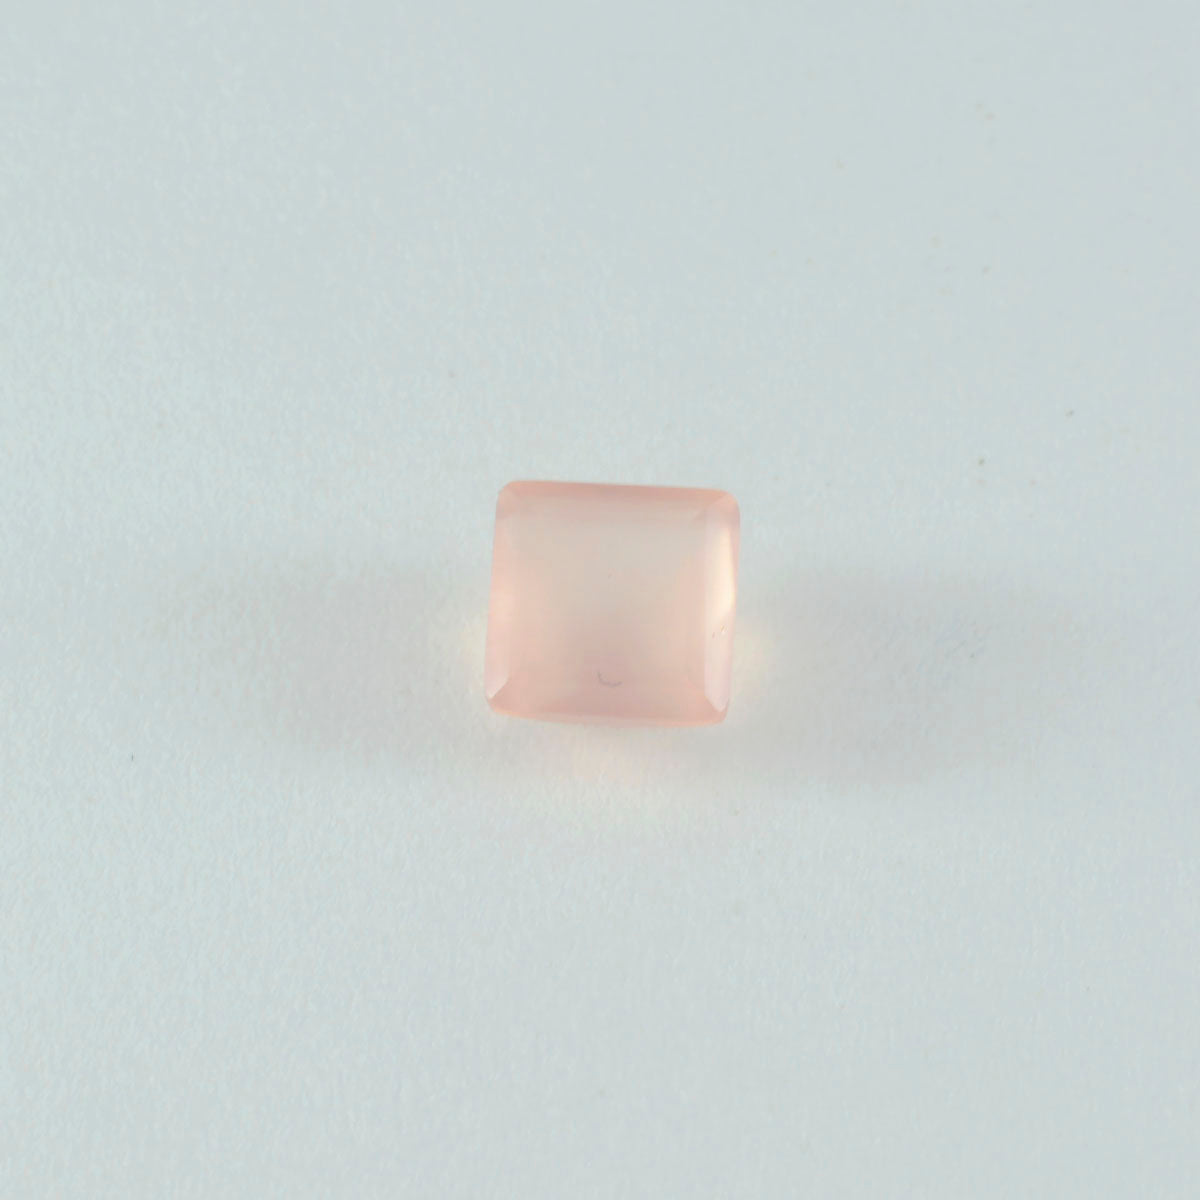 Riyogems 1PC Pink Rose Quartz Faceted 12x12 mm Square Shape sweet Quality Loose Stone